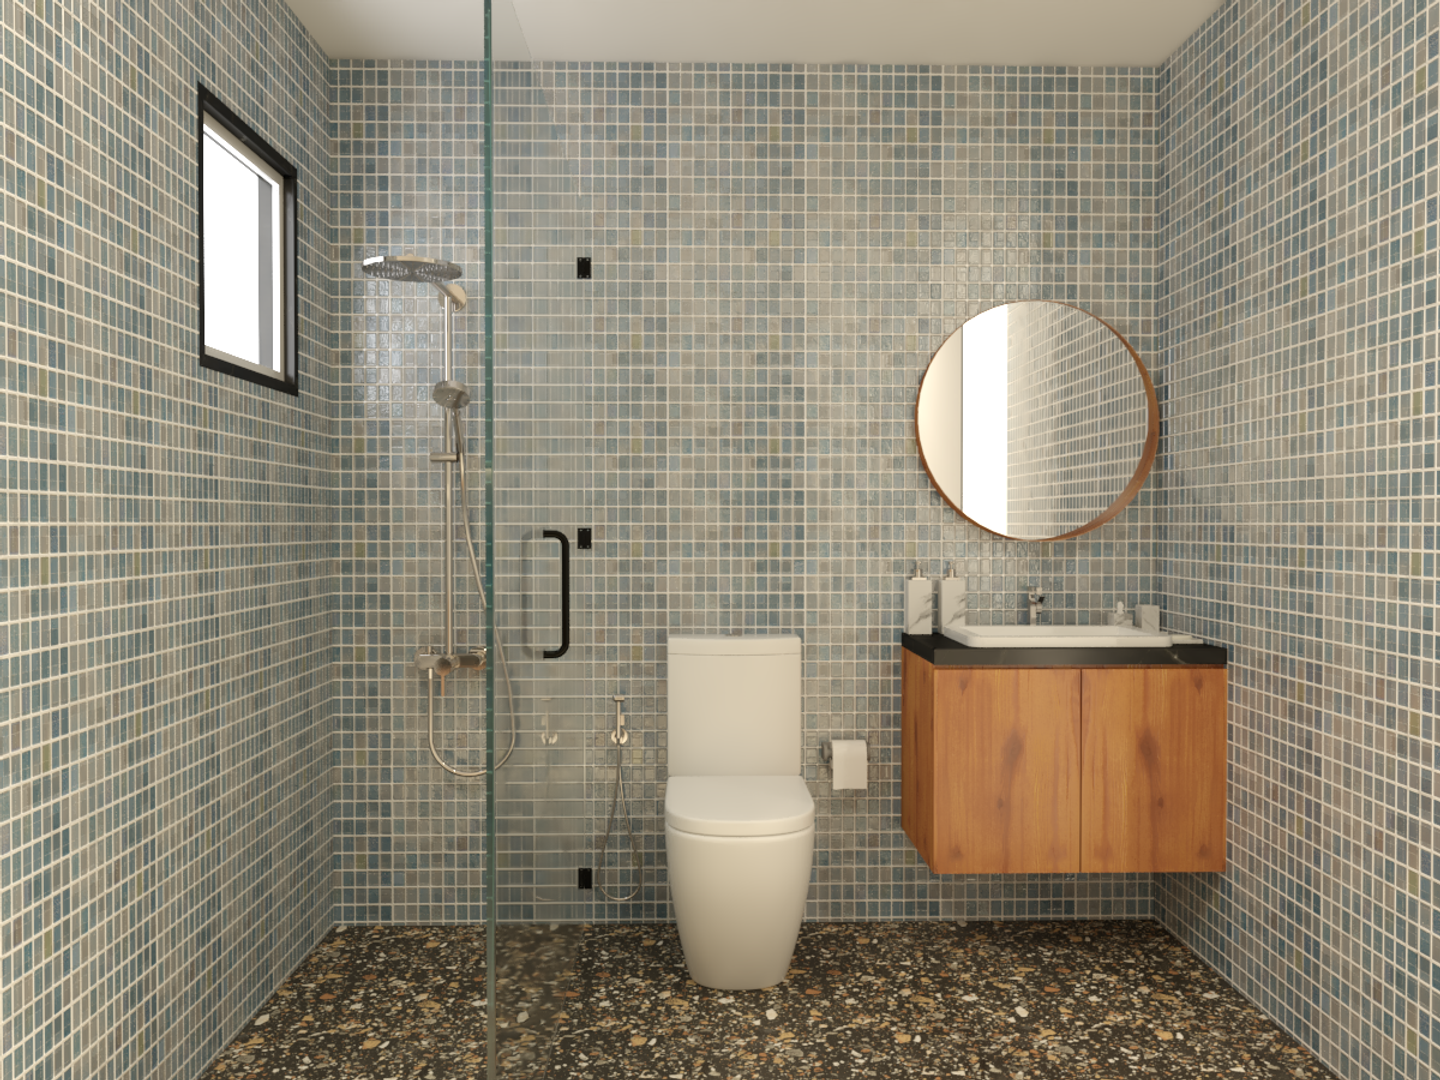 Tiled Minimal Storage Compact Bathroom Design with Round Mirror - Livspace